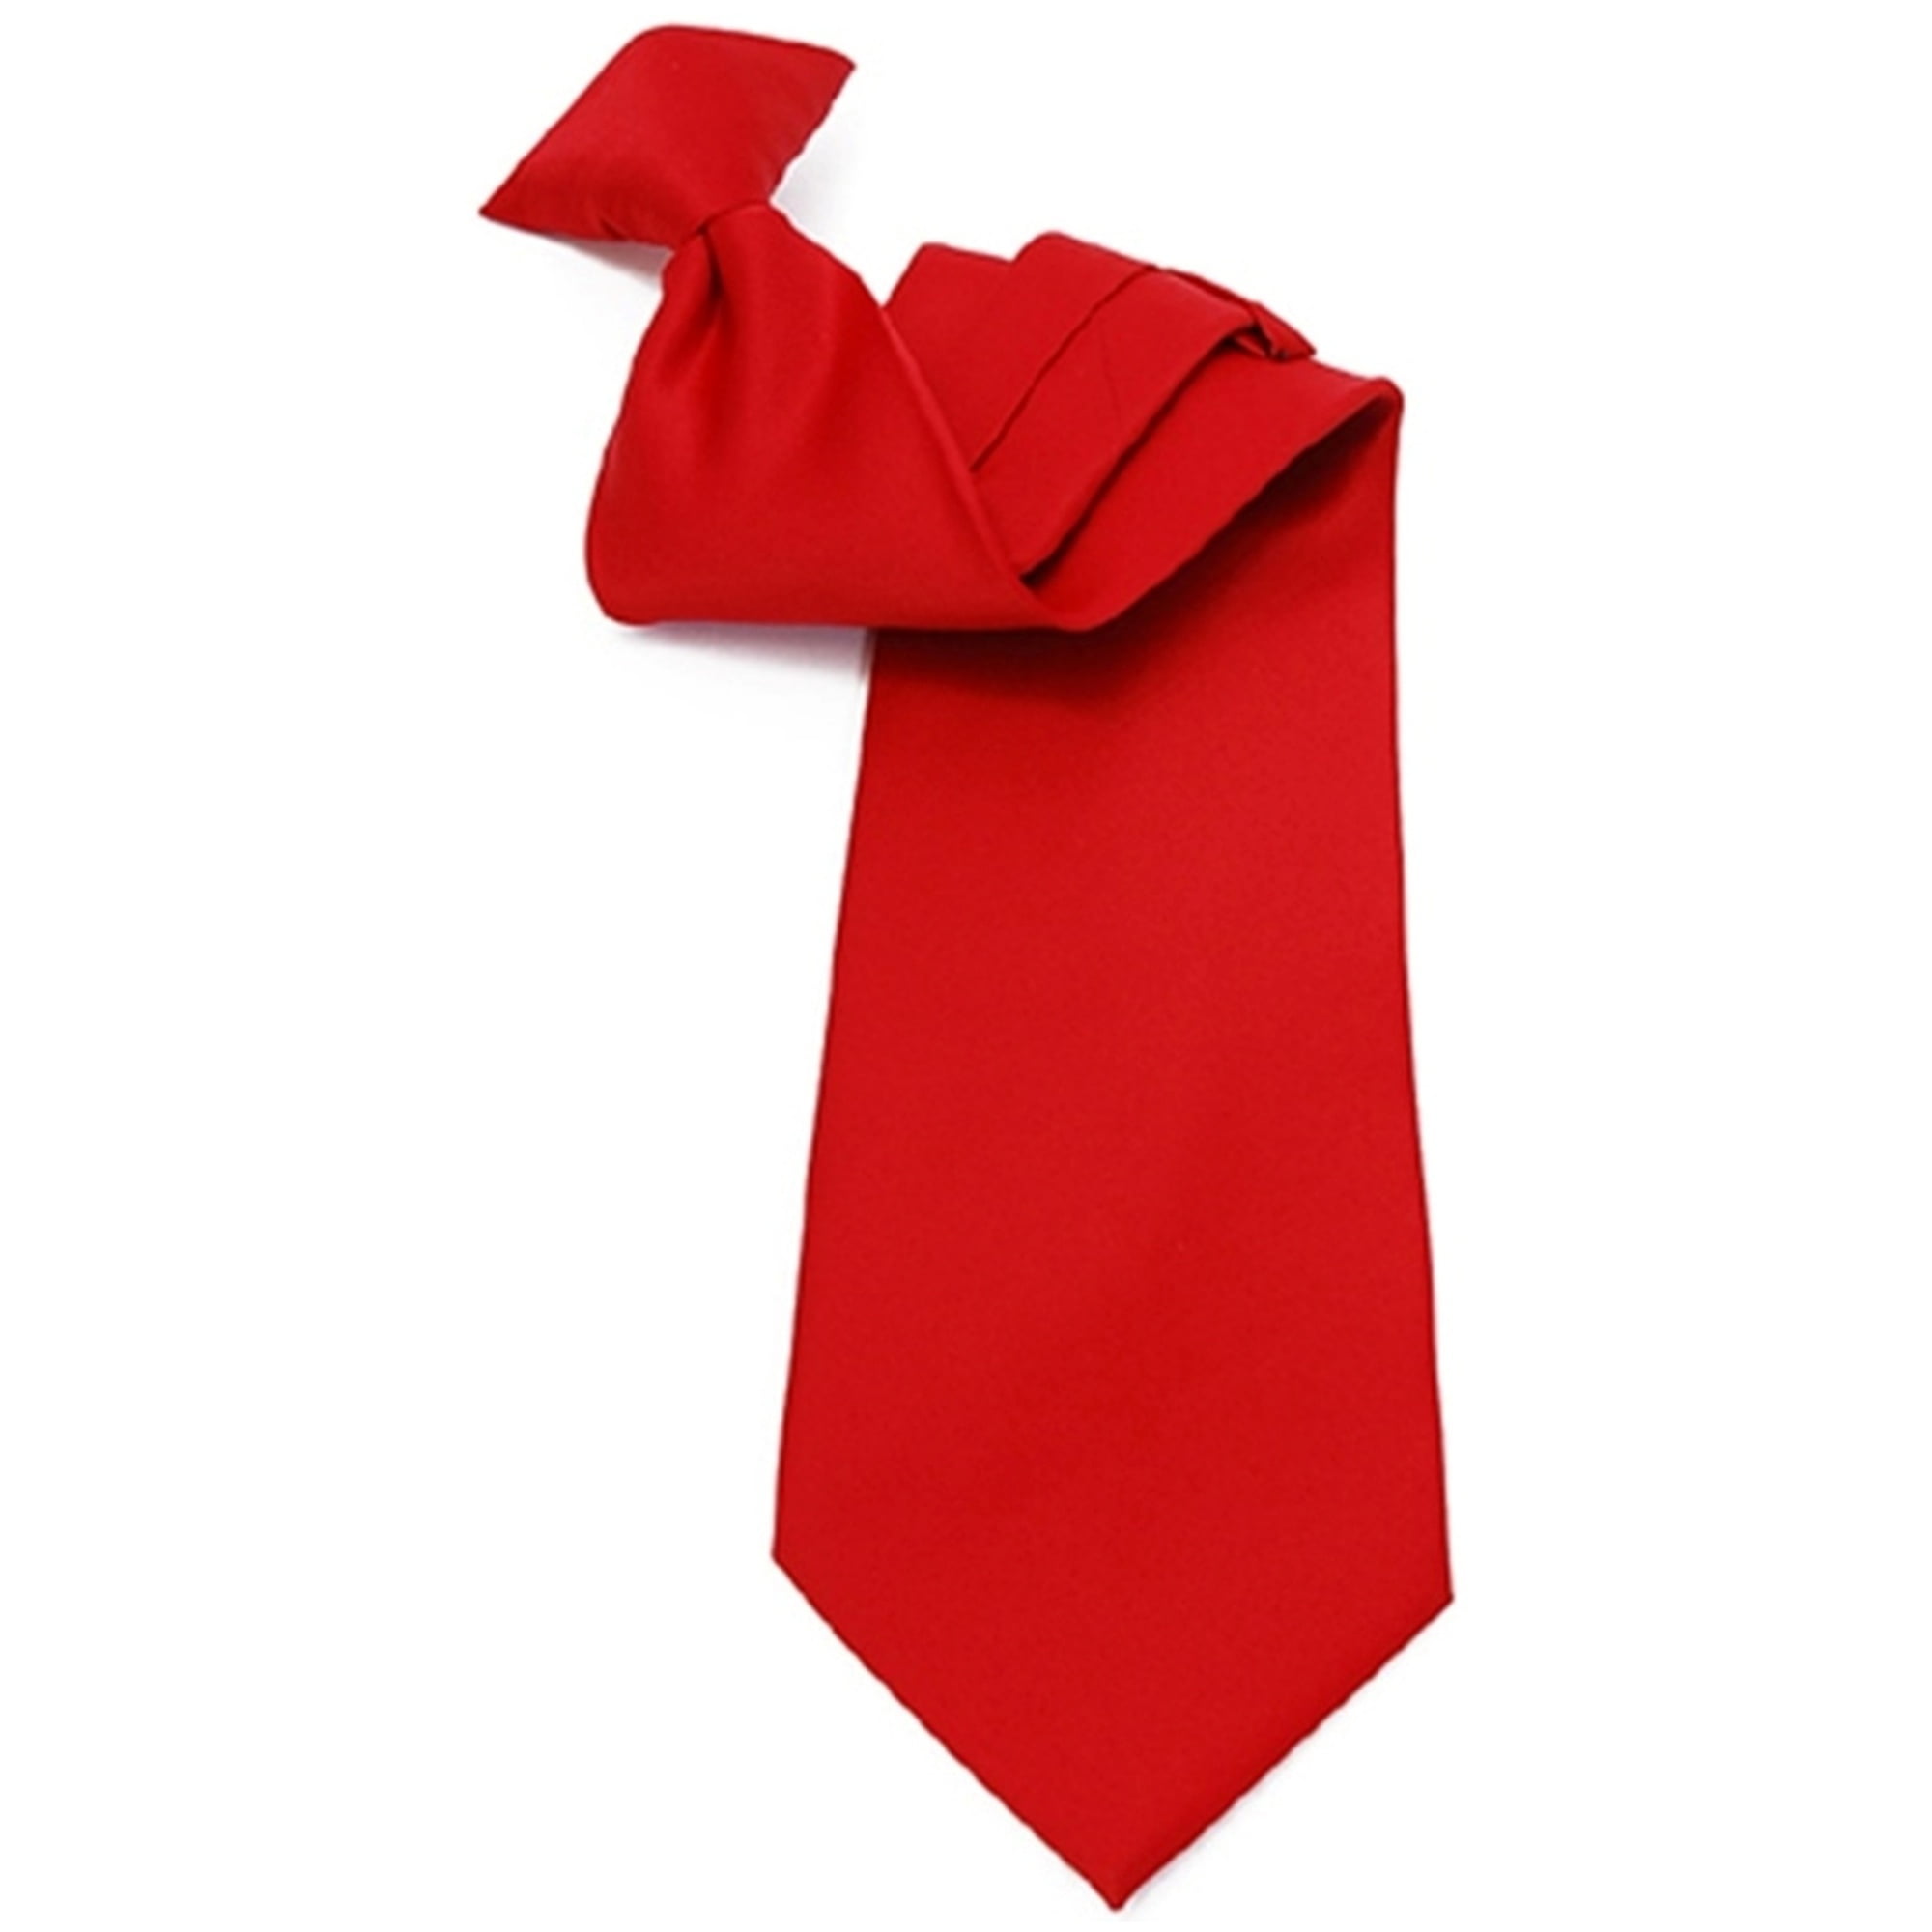 Red Tie Clip Art - Red Tie Image